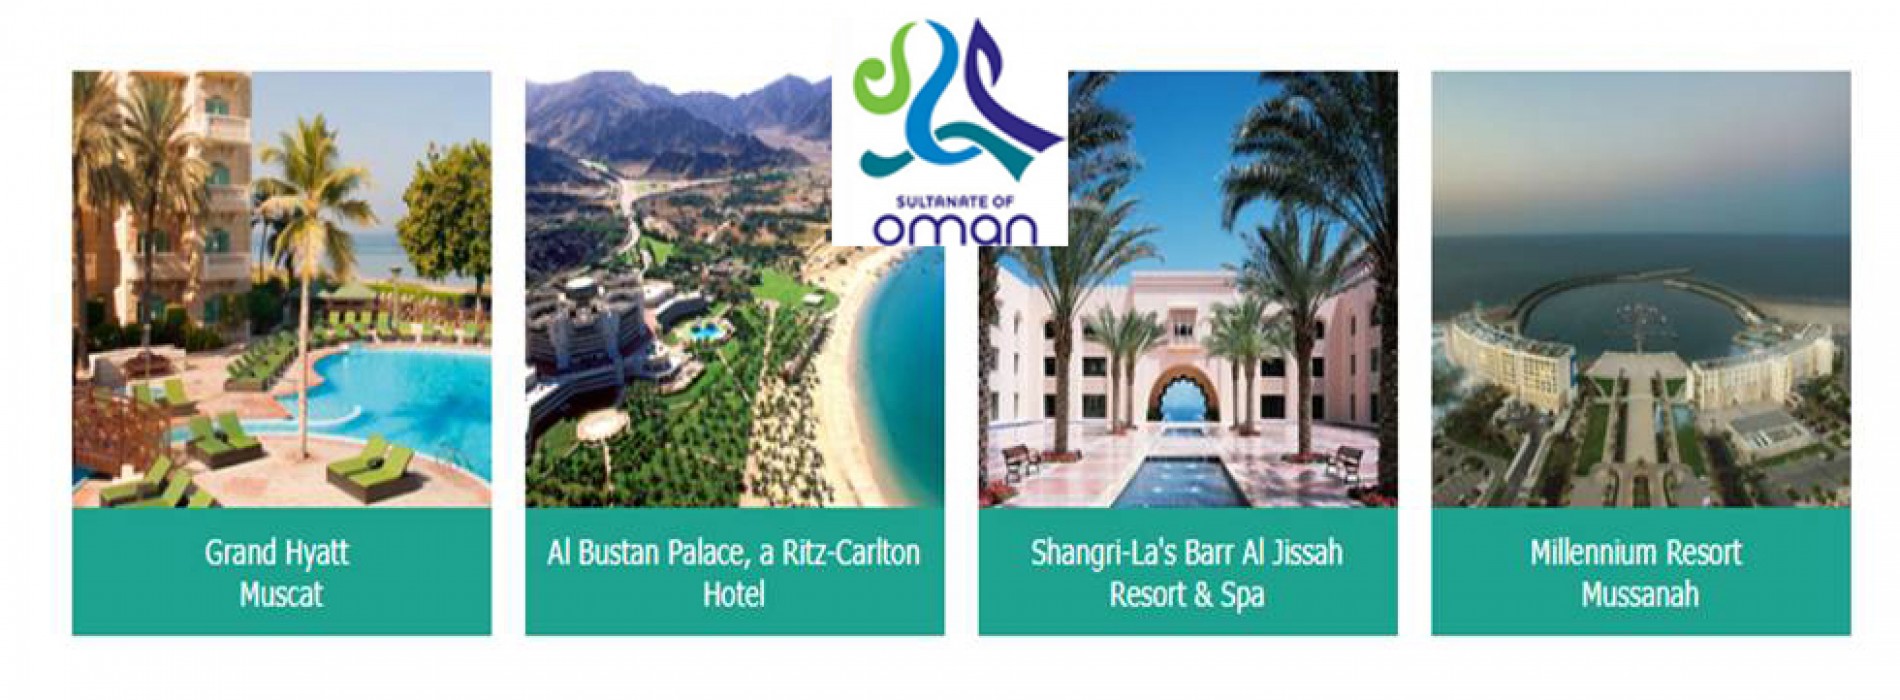 ‘Oman’ for destination wedding and celebrations